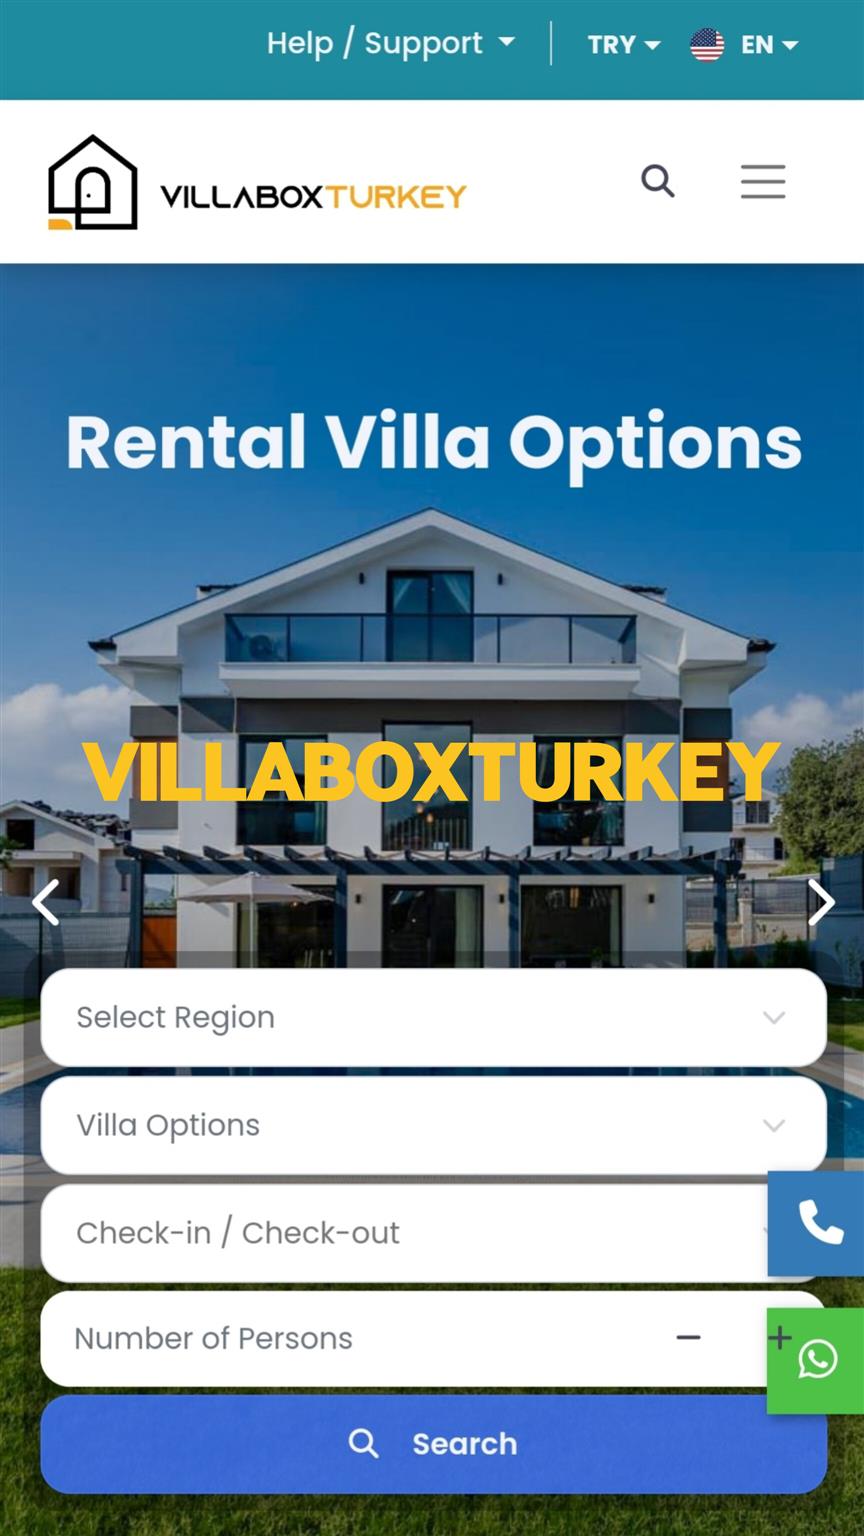 Villa Box Turkey